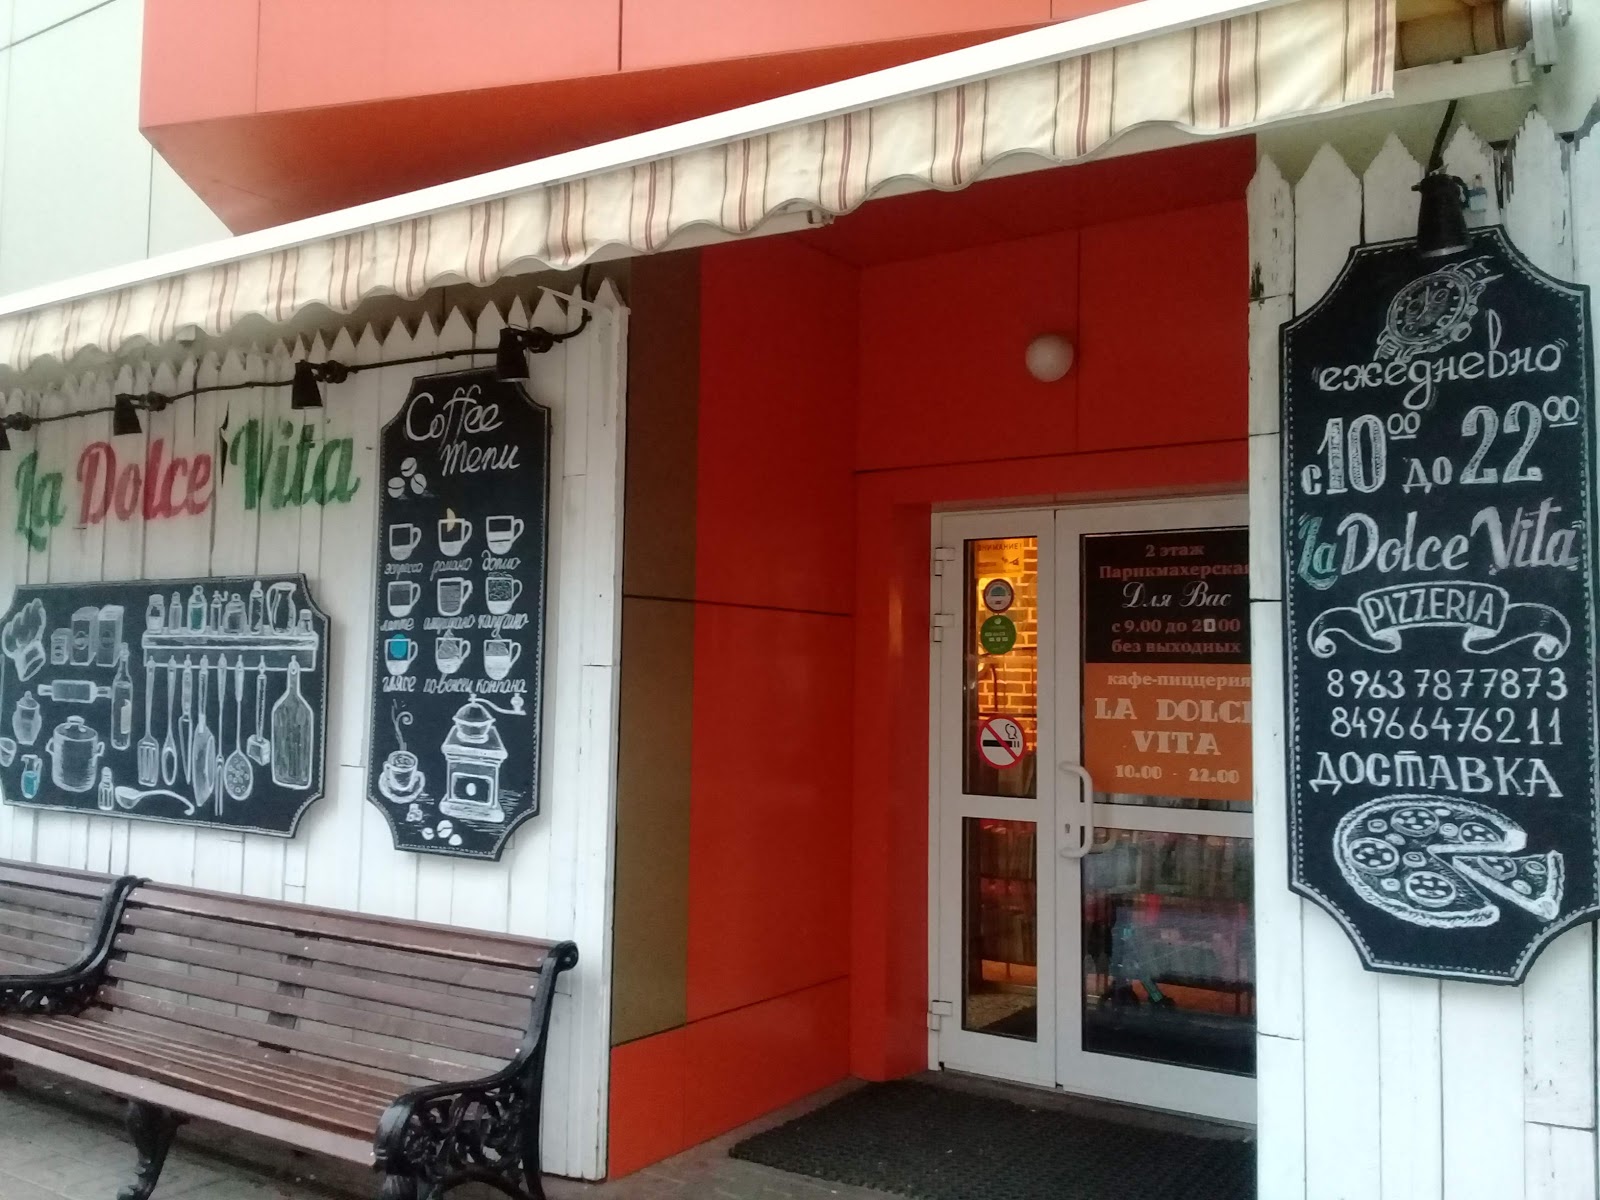 La Dolce Vita Cafe Pizzeria